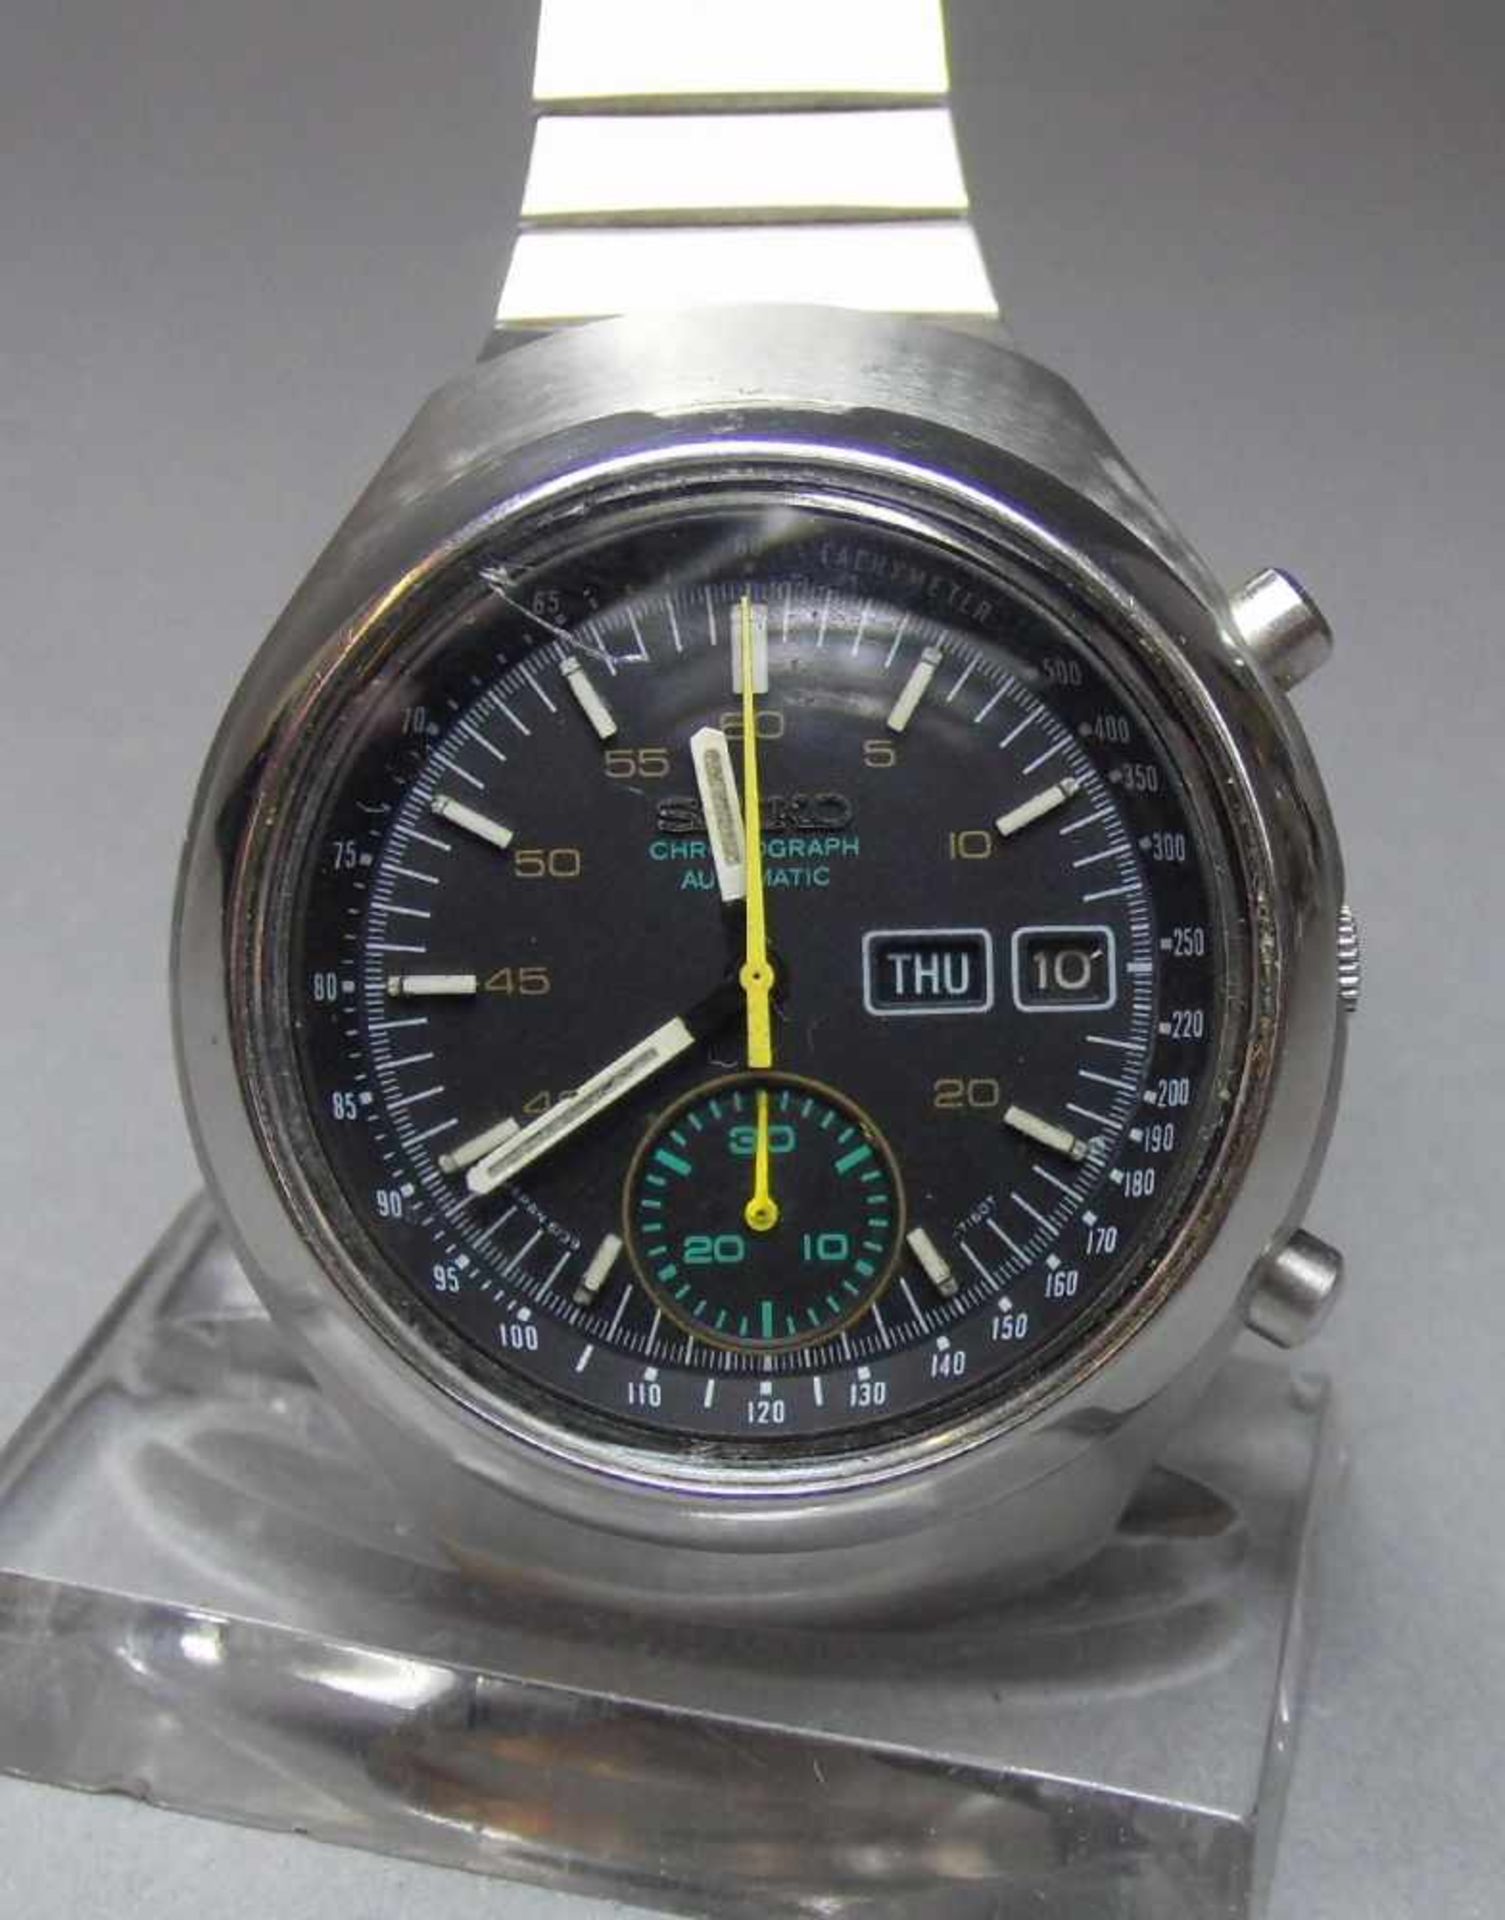 VINTAGE CHRONOGRAPH / ARMBANDUHR : SEIKO - 6139 - 7160 T / wristwatch, Japan, 1970er Jahre,